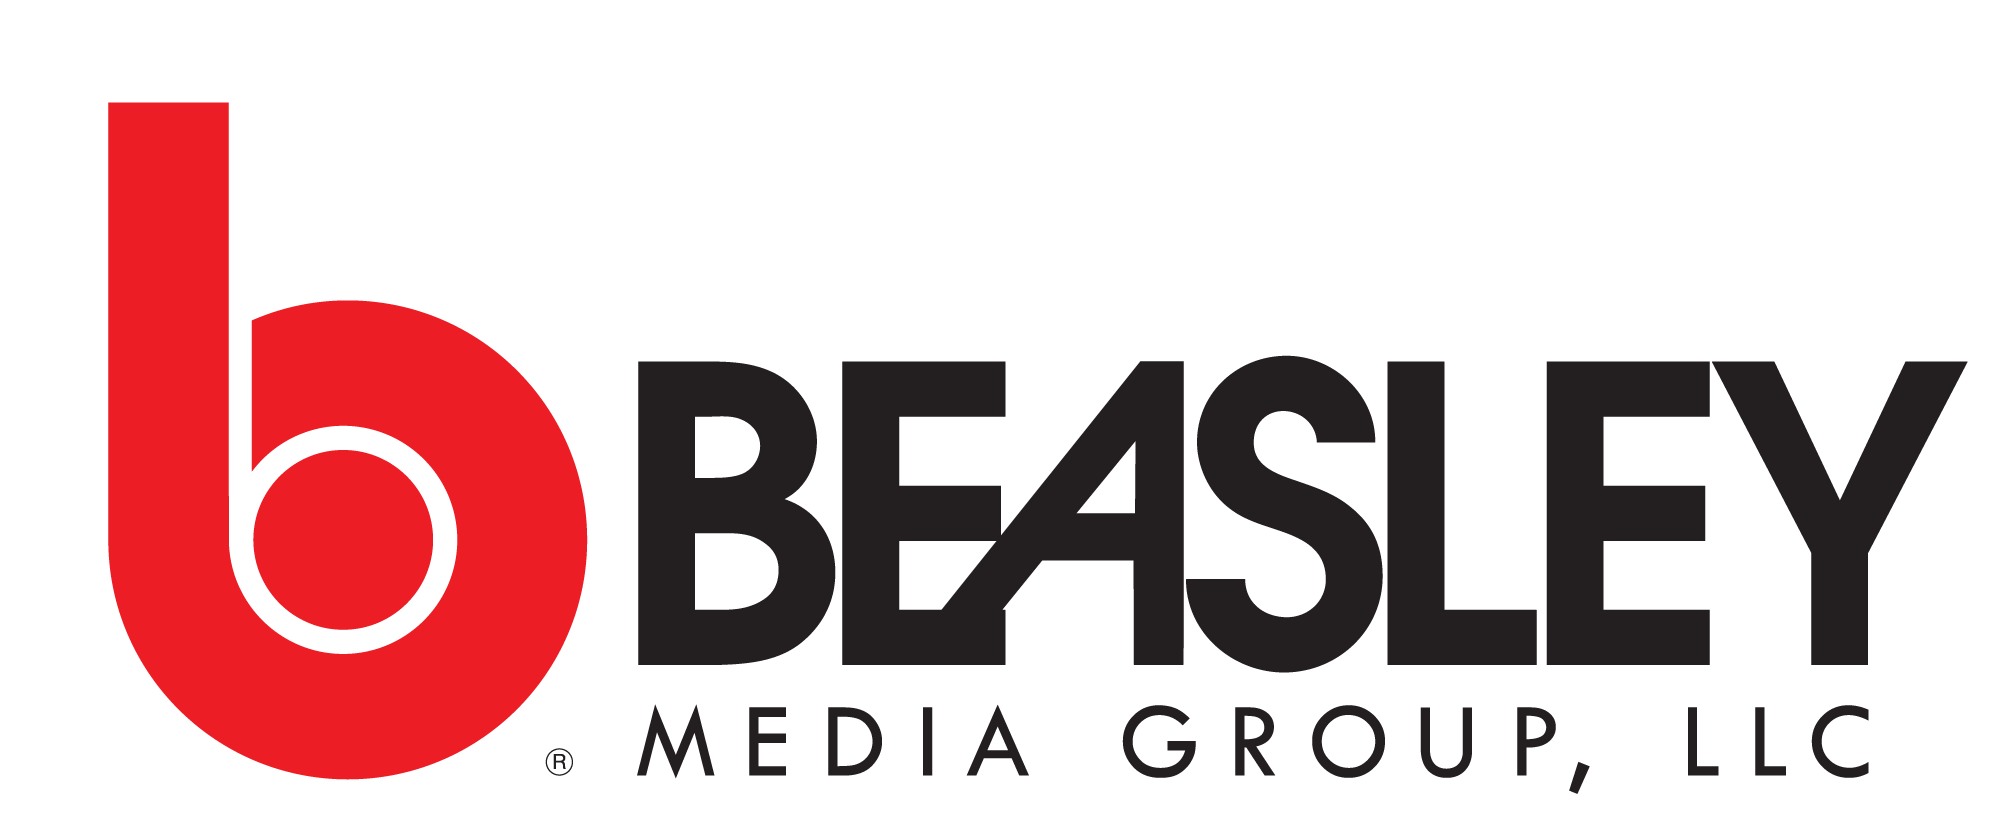 Beasley-Media-Group-LLC_Logo.png